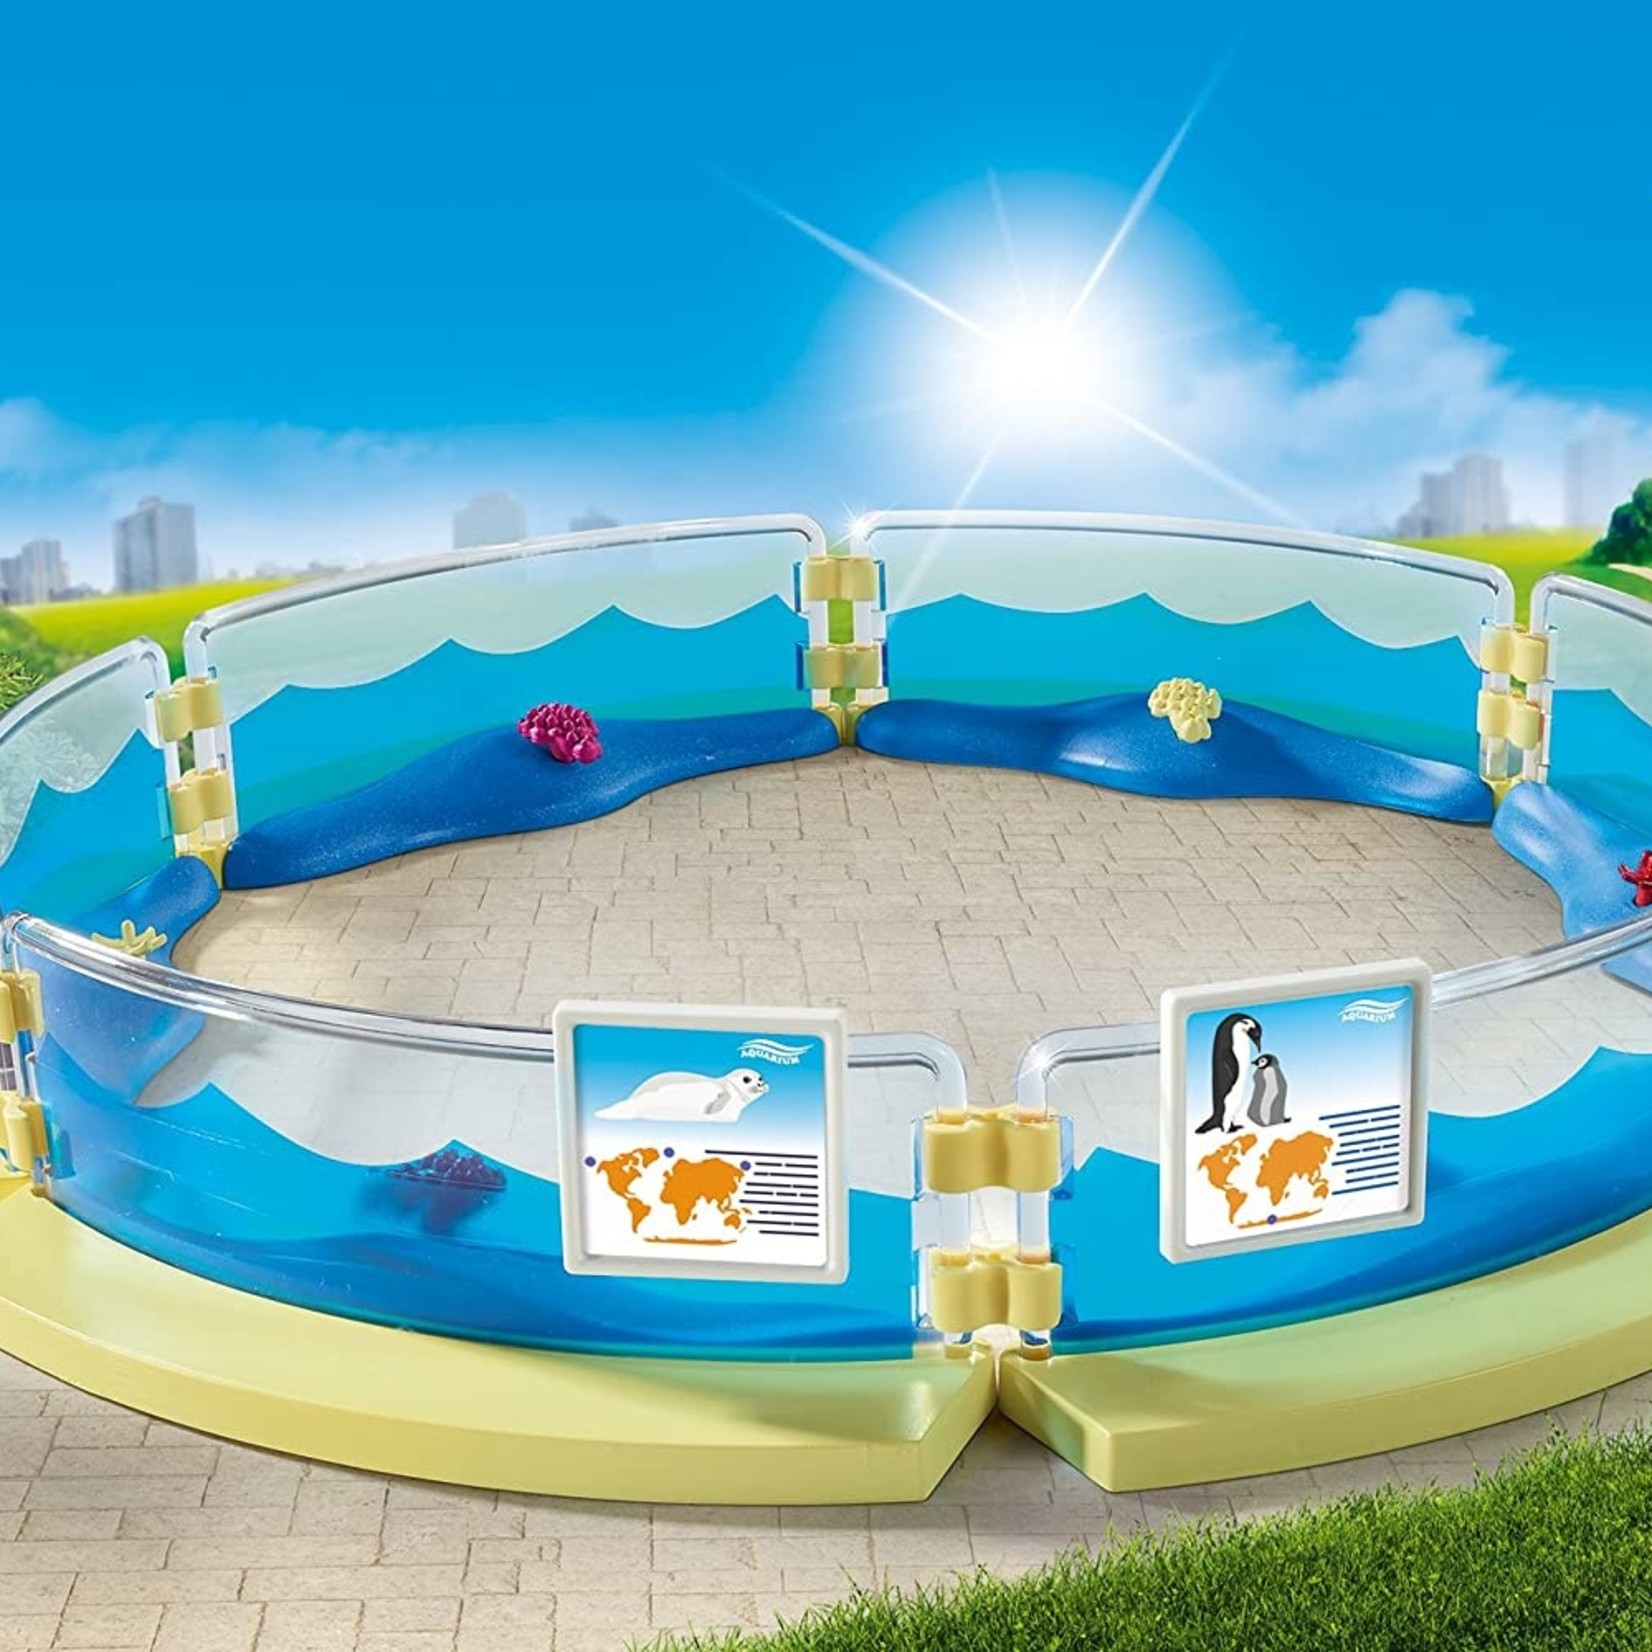 Playmobil Playmobil Family Fun 9063 - Enclos pour animaux marins